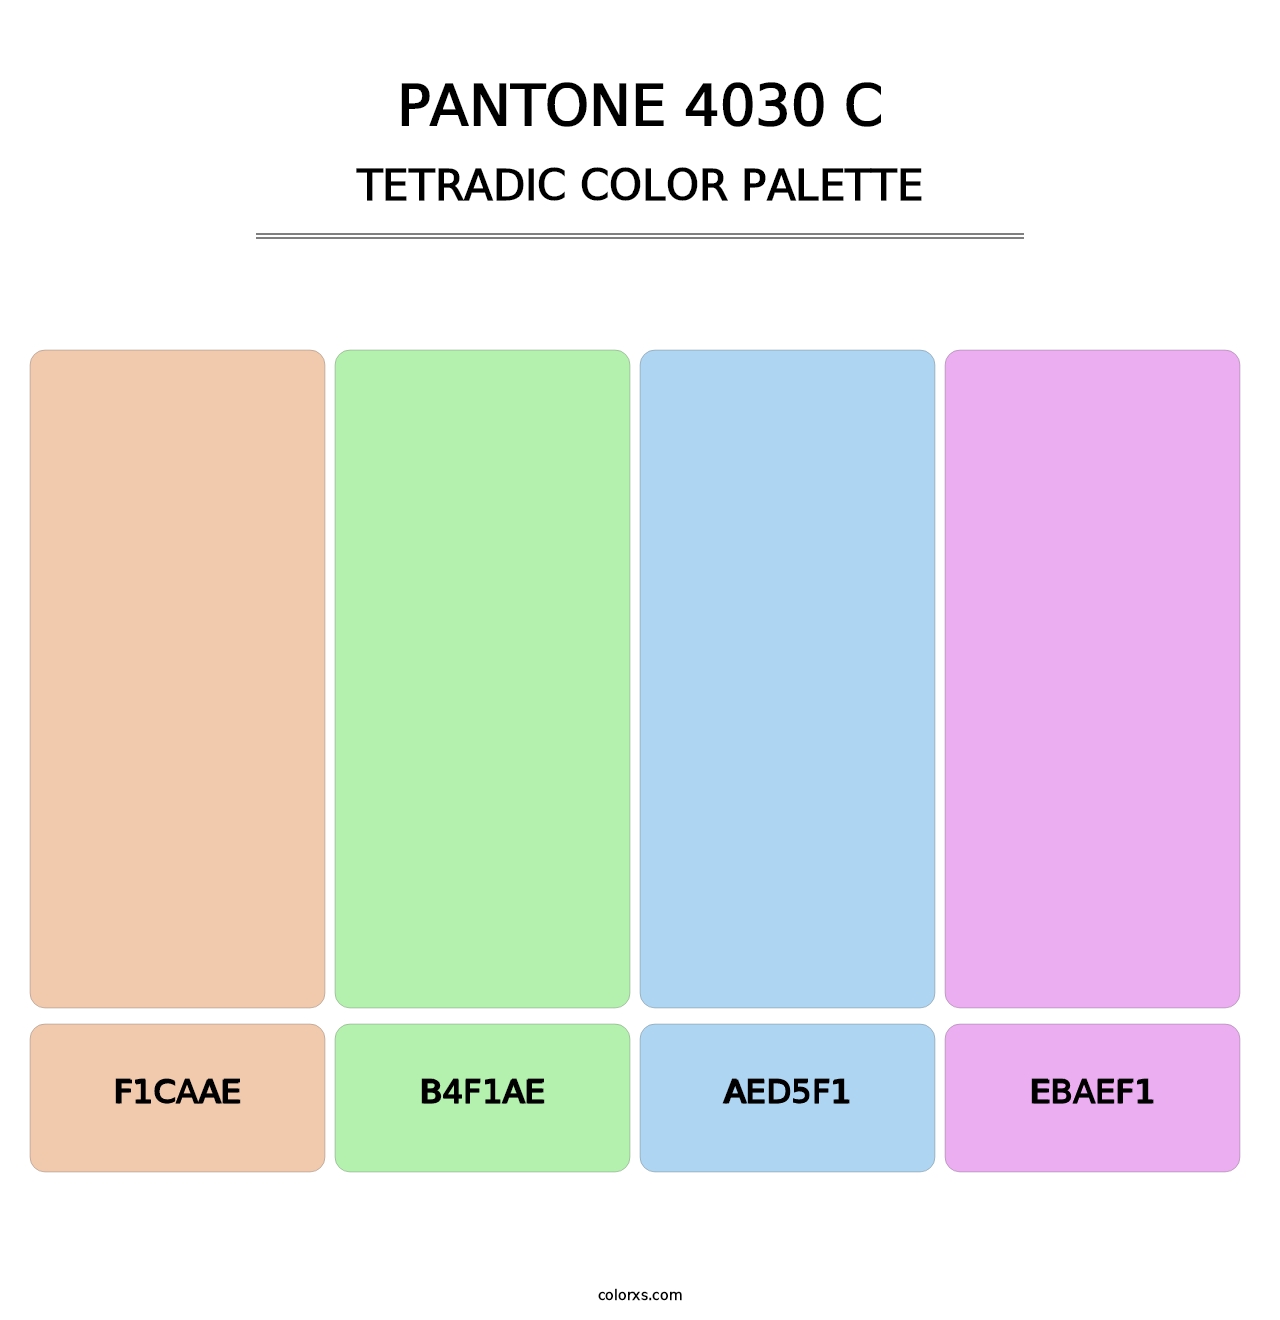 PANTONE 4030 C - Tetradic Color Palette